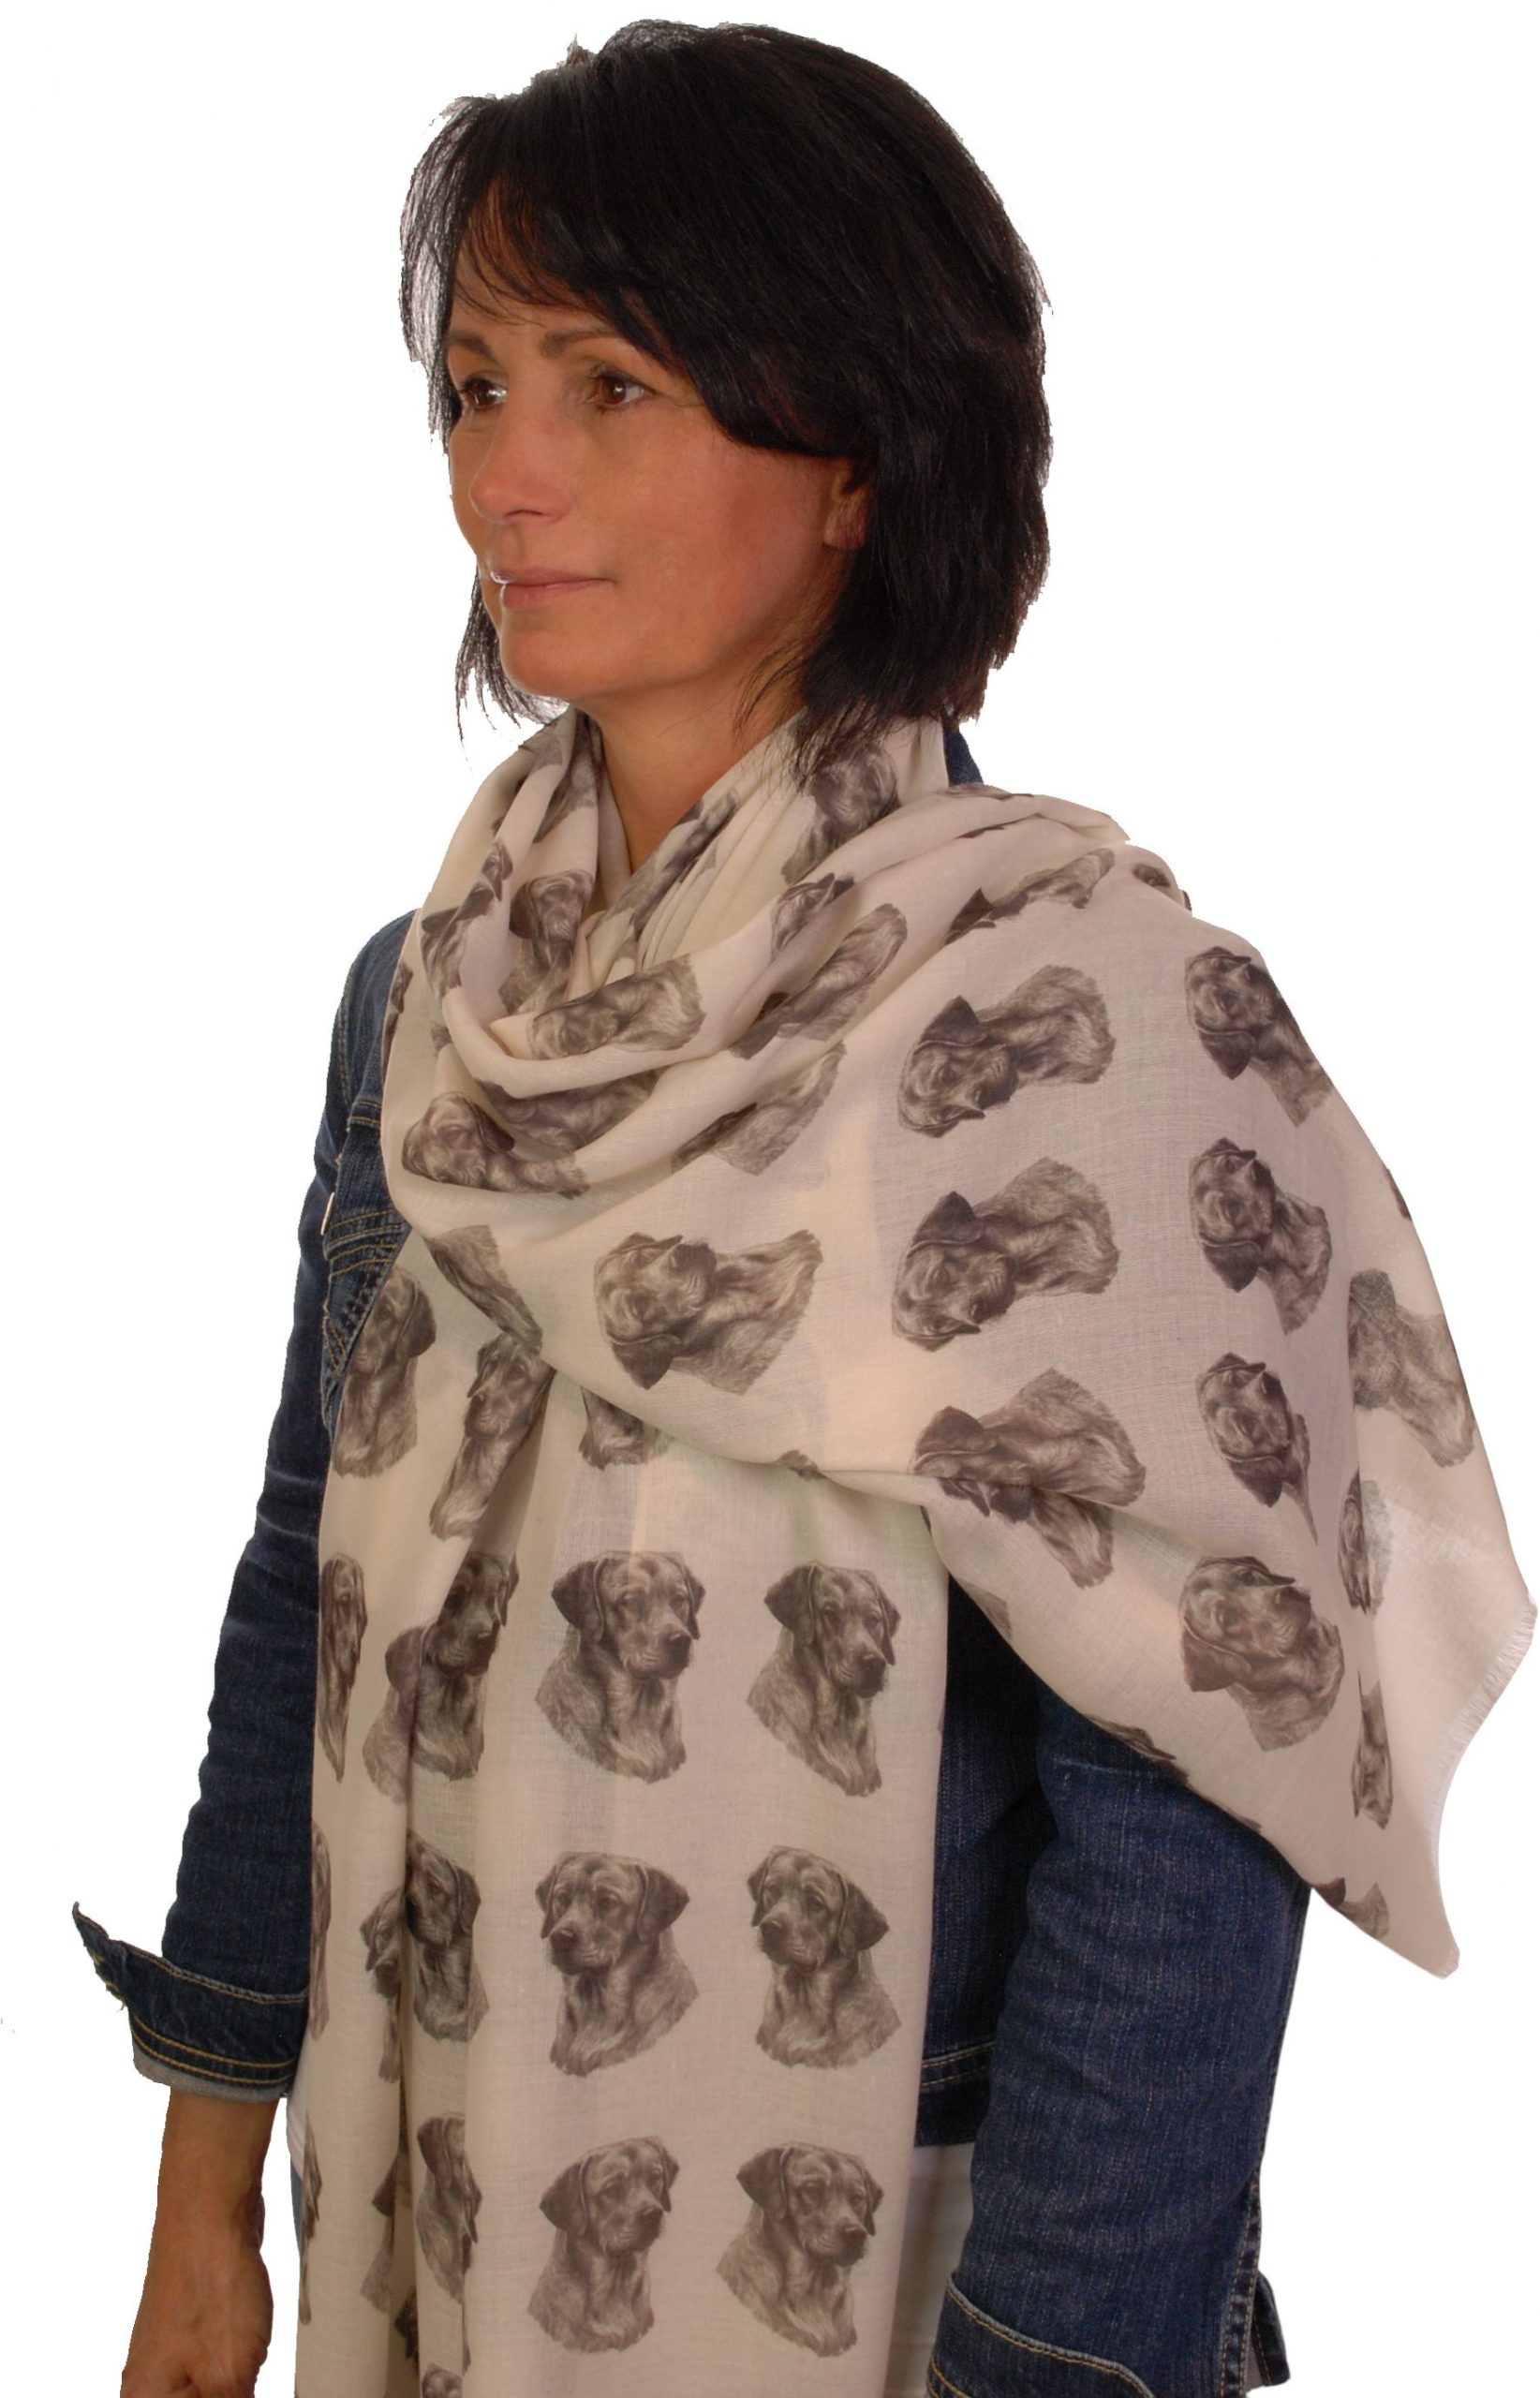 Mike Sibley Yellow Labrador licensed design ladies fashion scarf